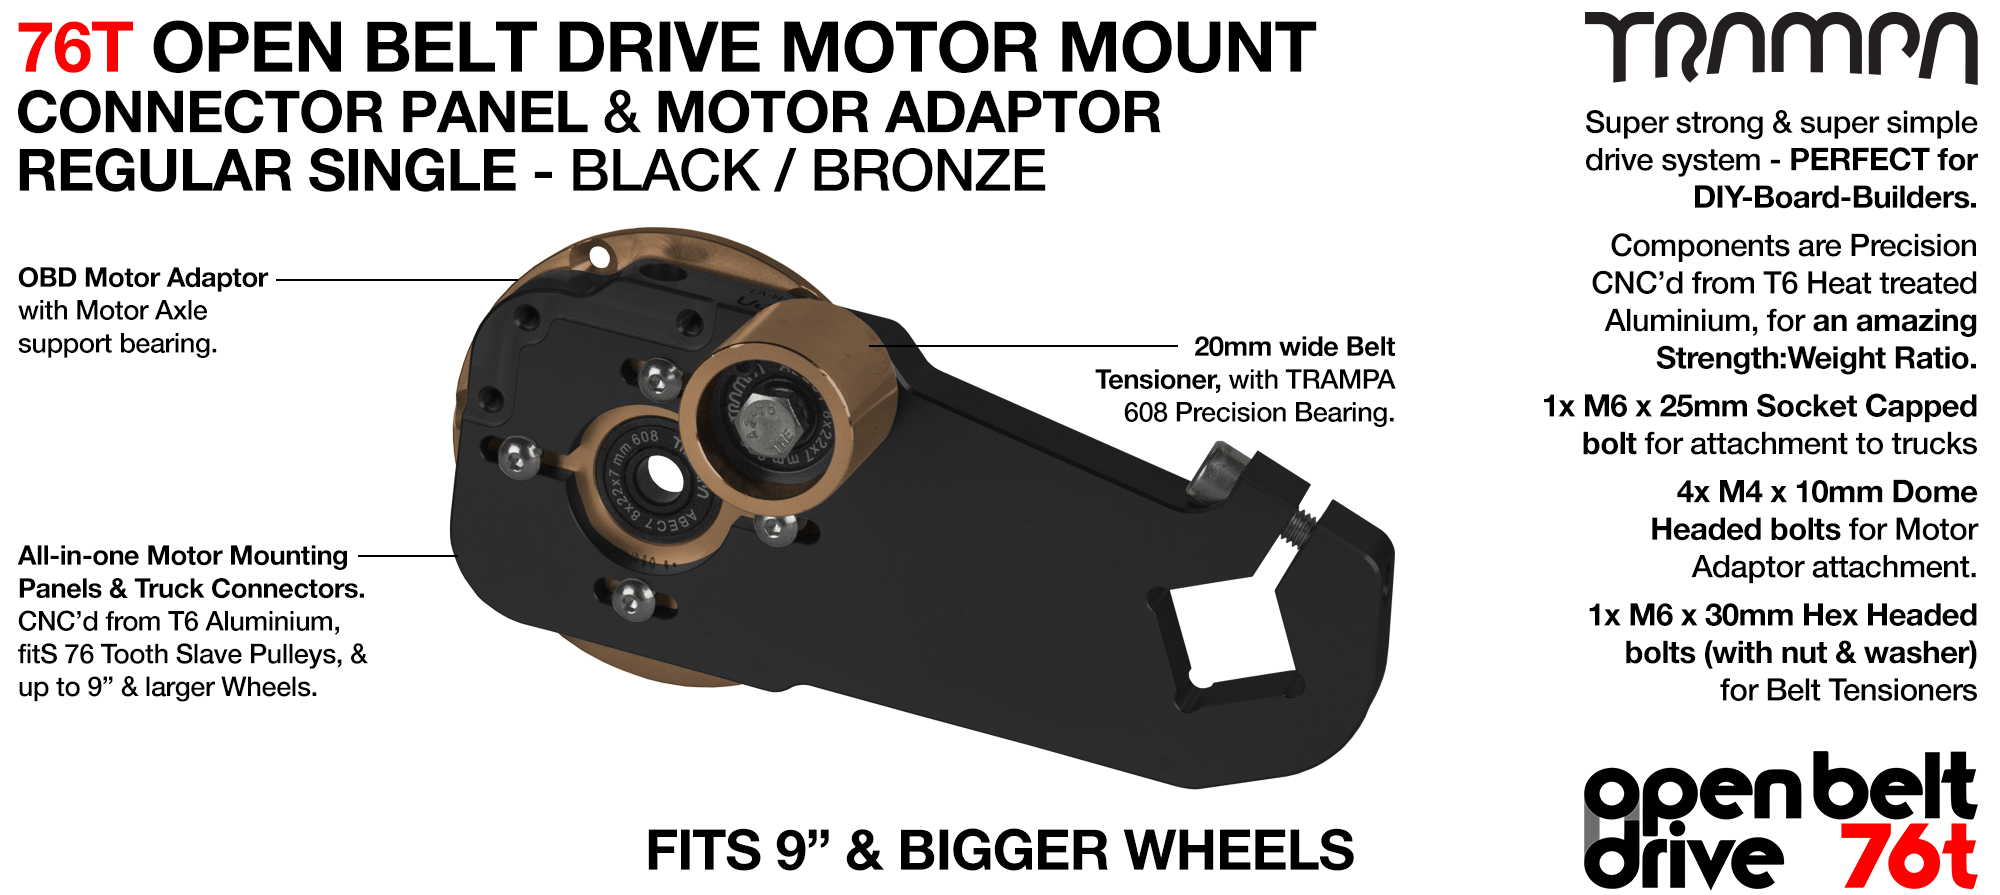 76T Open Belt Drive Motor Mount & Motor Adaptor - SINGLE BRONZE